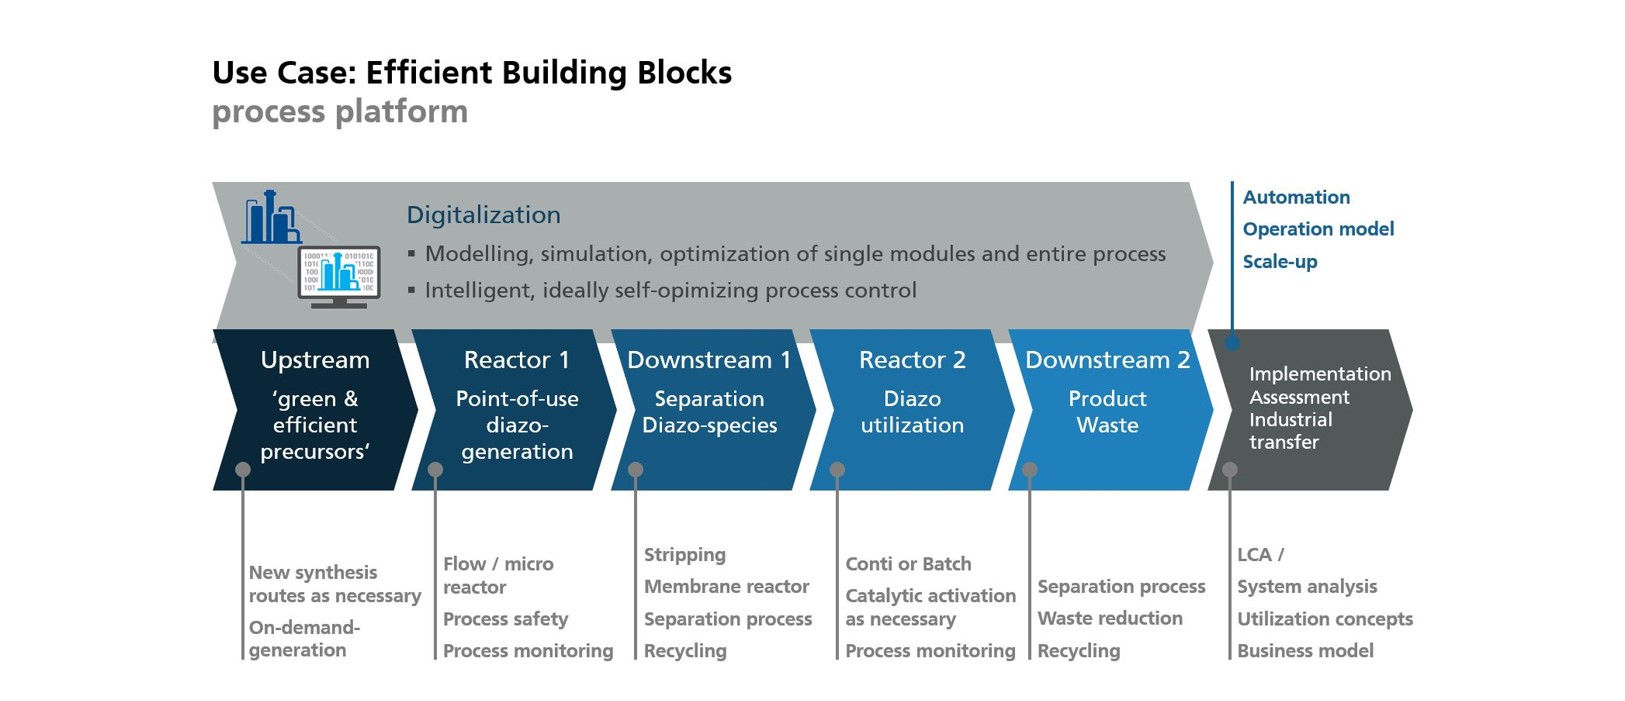 Schematic representation of the 'efficient building blocks' process platform